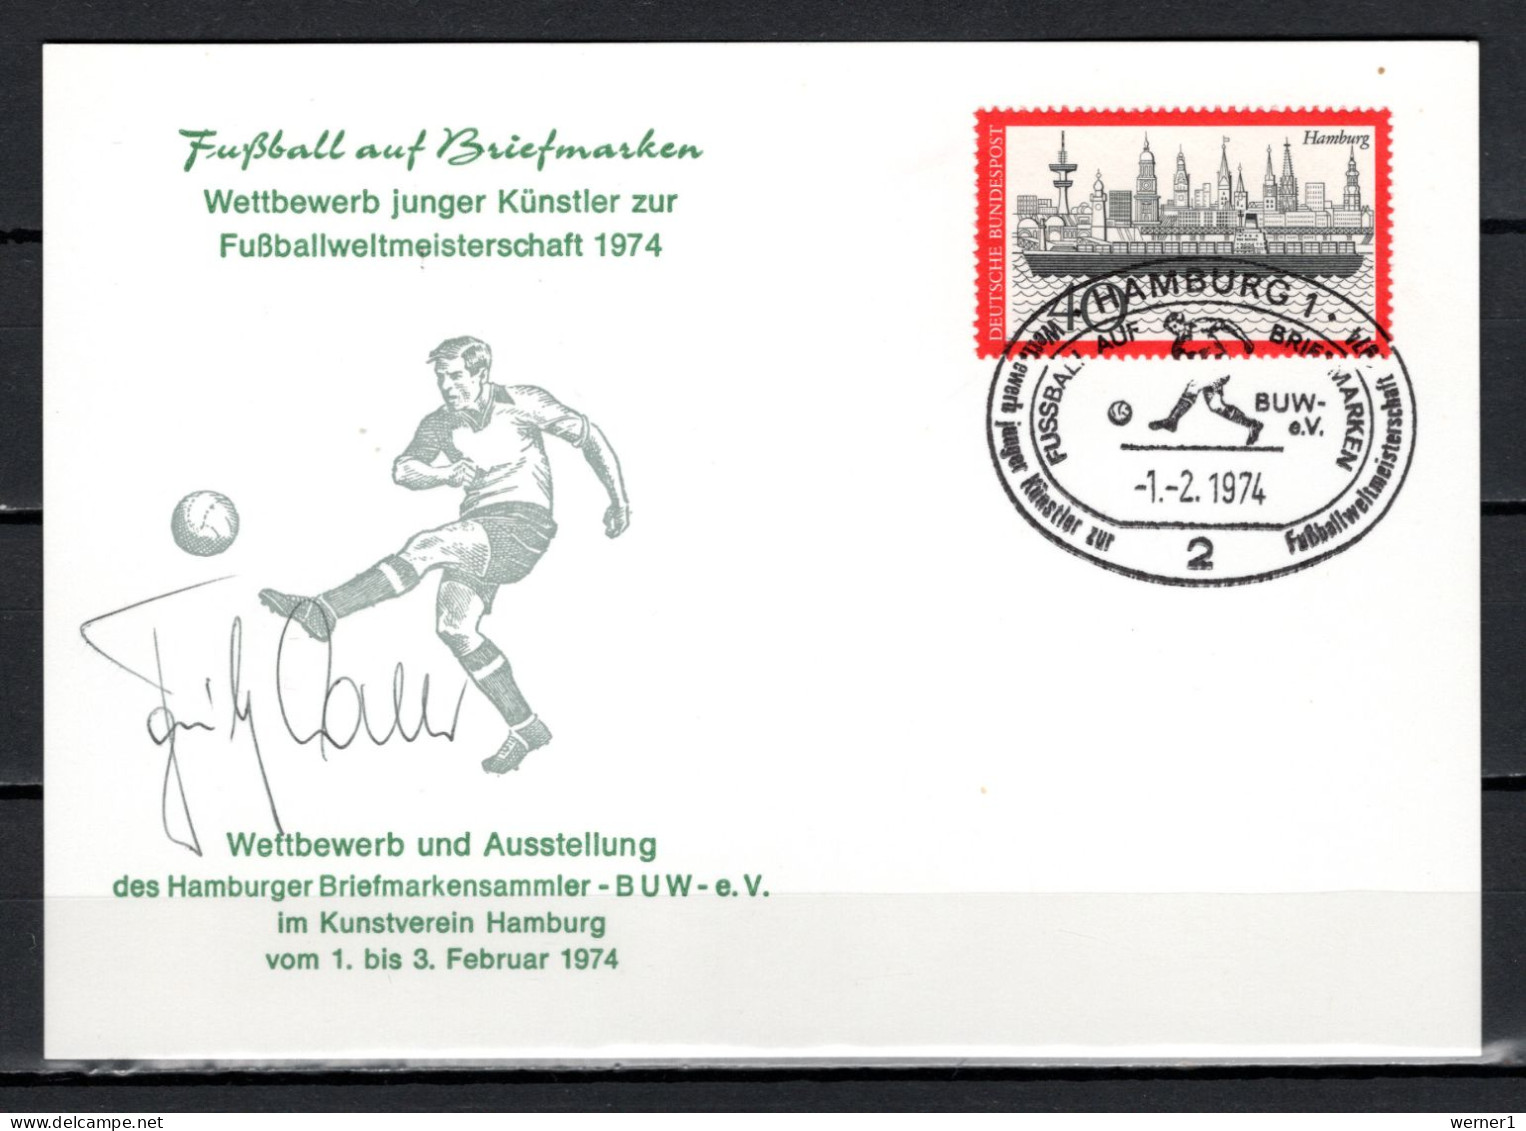 Germany 1974 Football Soccer World Cup Autograph Postcard With Original Signature Of Fritz Walter - 1974 – Westdeutschland